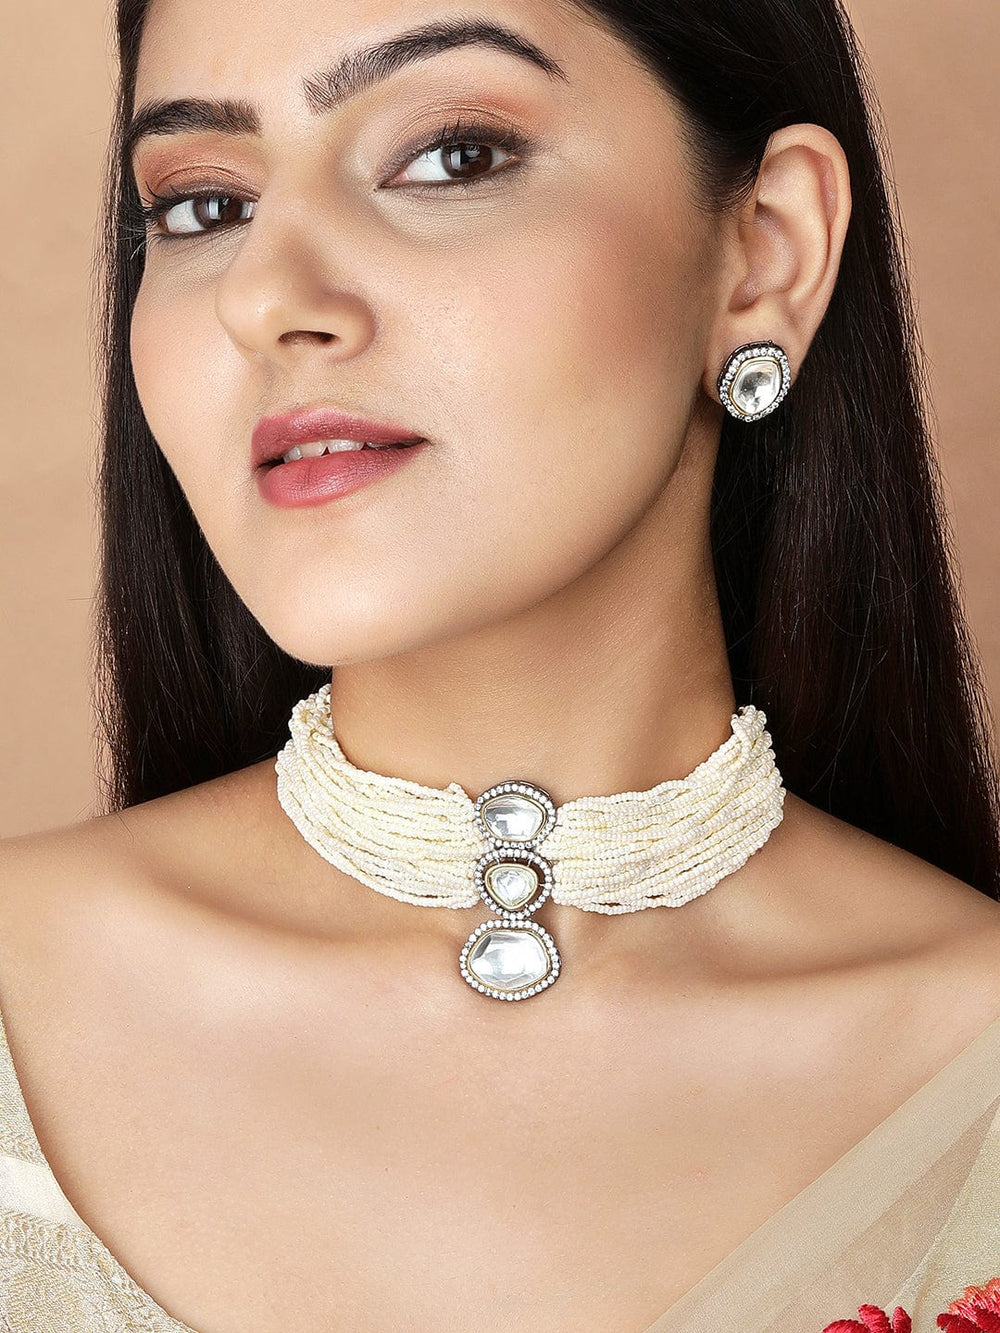 American Diamond Wedding Choker necklace low price | Cz Crystal choker  necklace | Rhodium-Silver tone AD Bridal choker set | Indian Designs